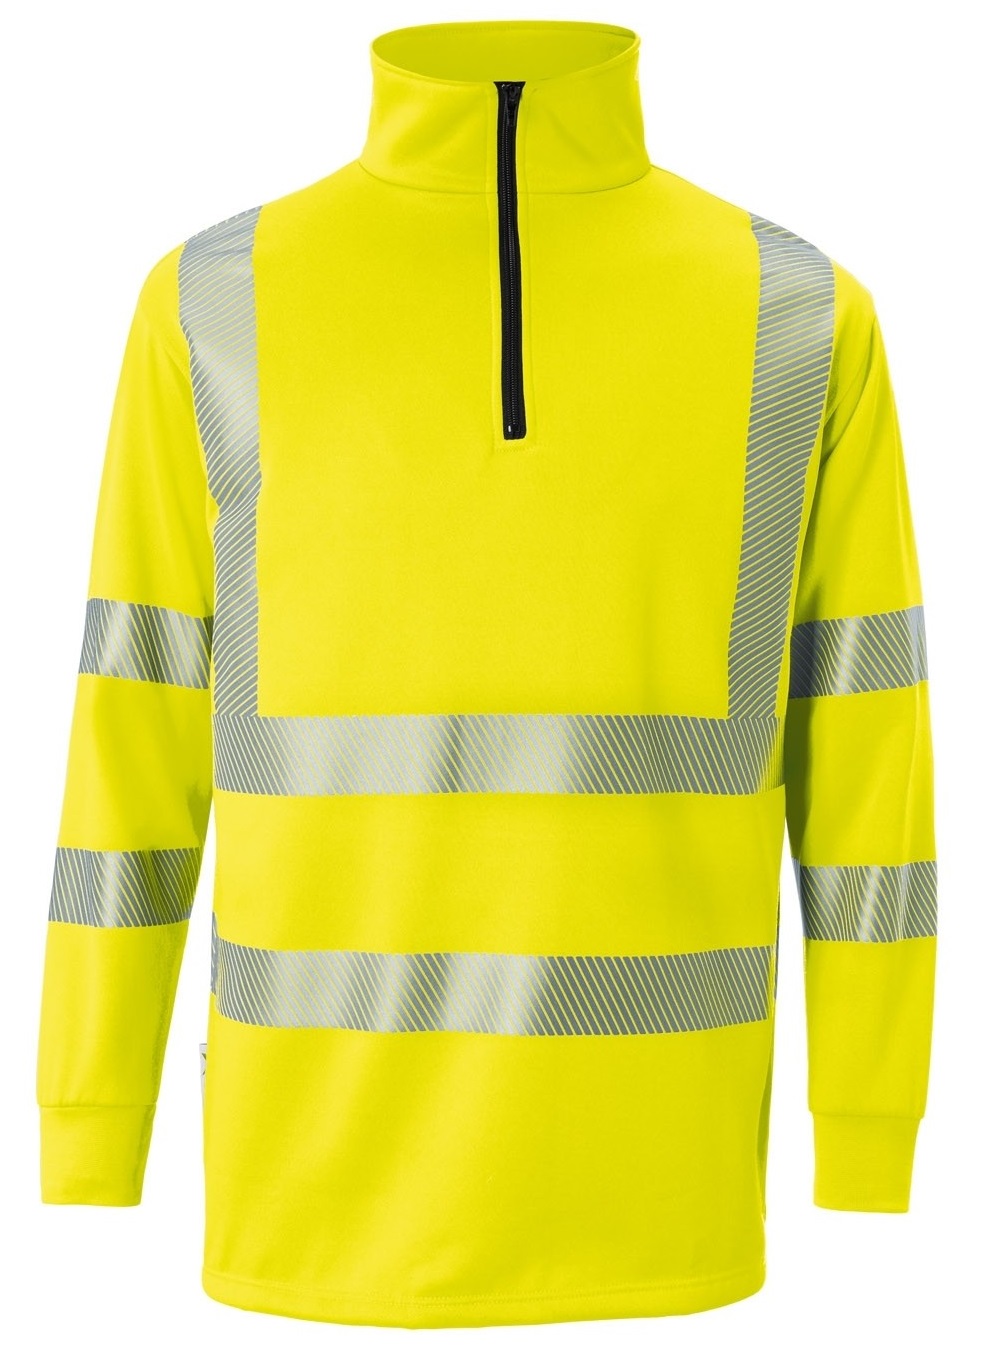 KÜBLER-Warnschutz, Warn-Zip-Sweater, REFLECTIQ, PSA 2, ca.300g/m², warngelb
